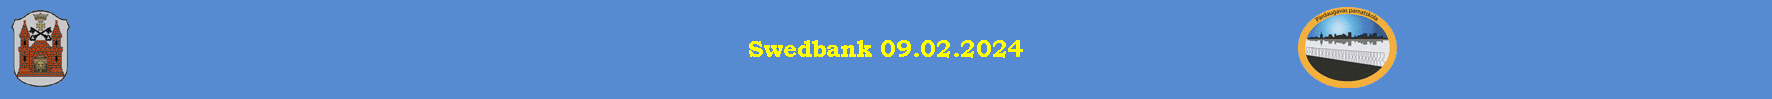 Swedbank 09.02.2024